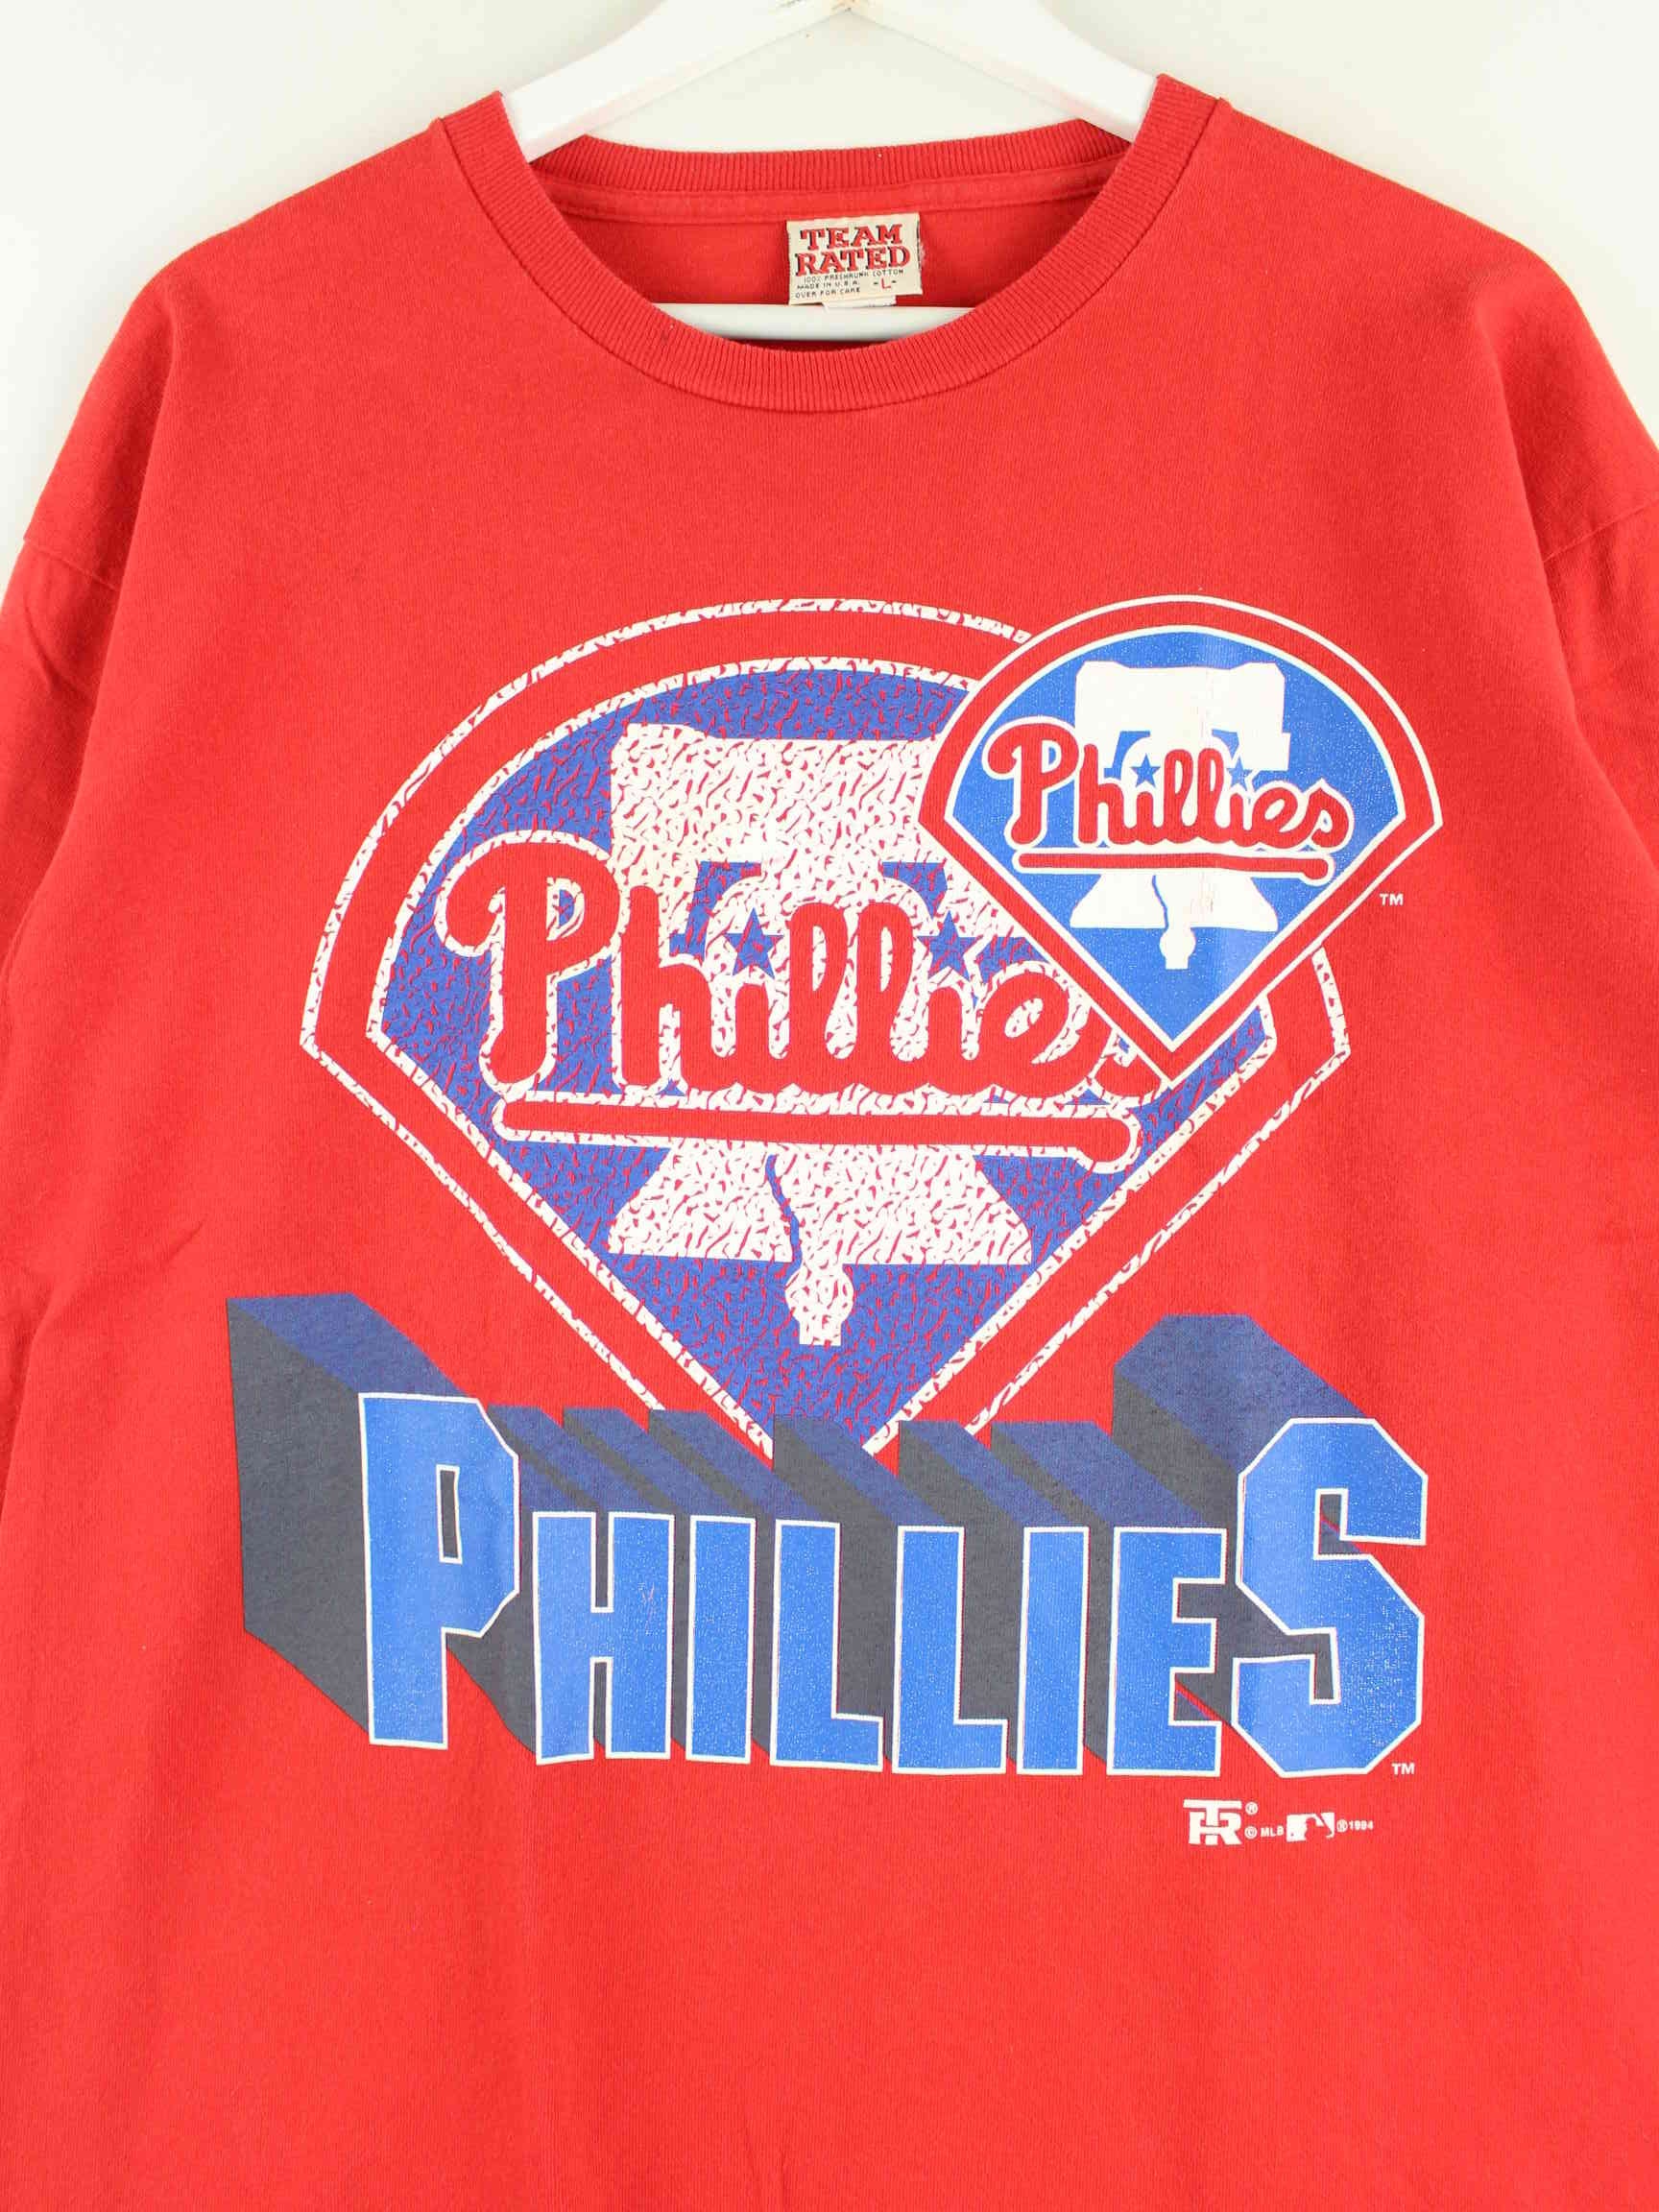 Team Rated x MLB 1994 Vintage Phillies Print T-Shirt Rot L (detail image 1)